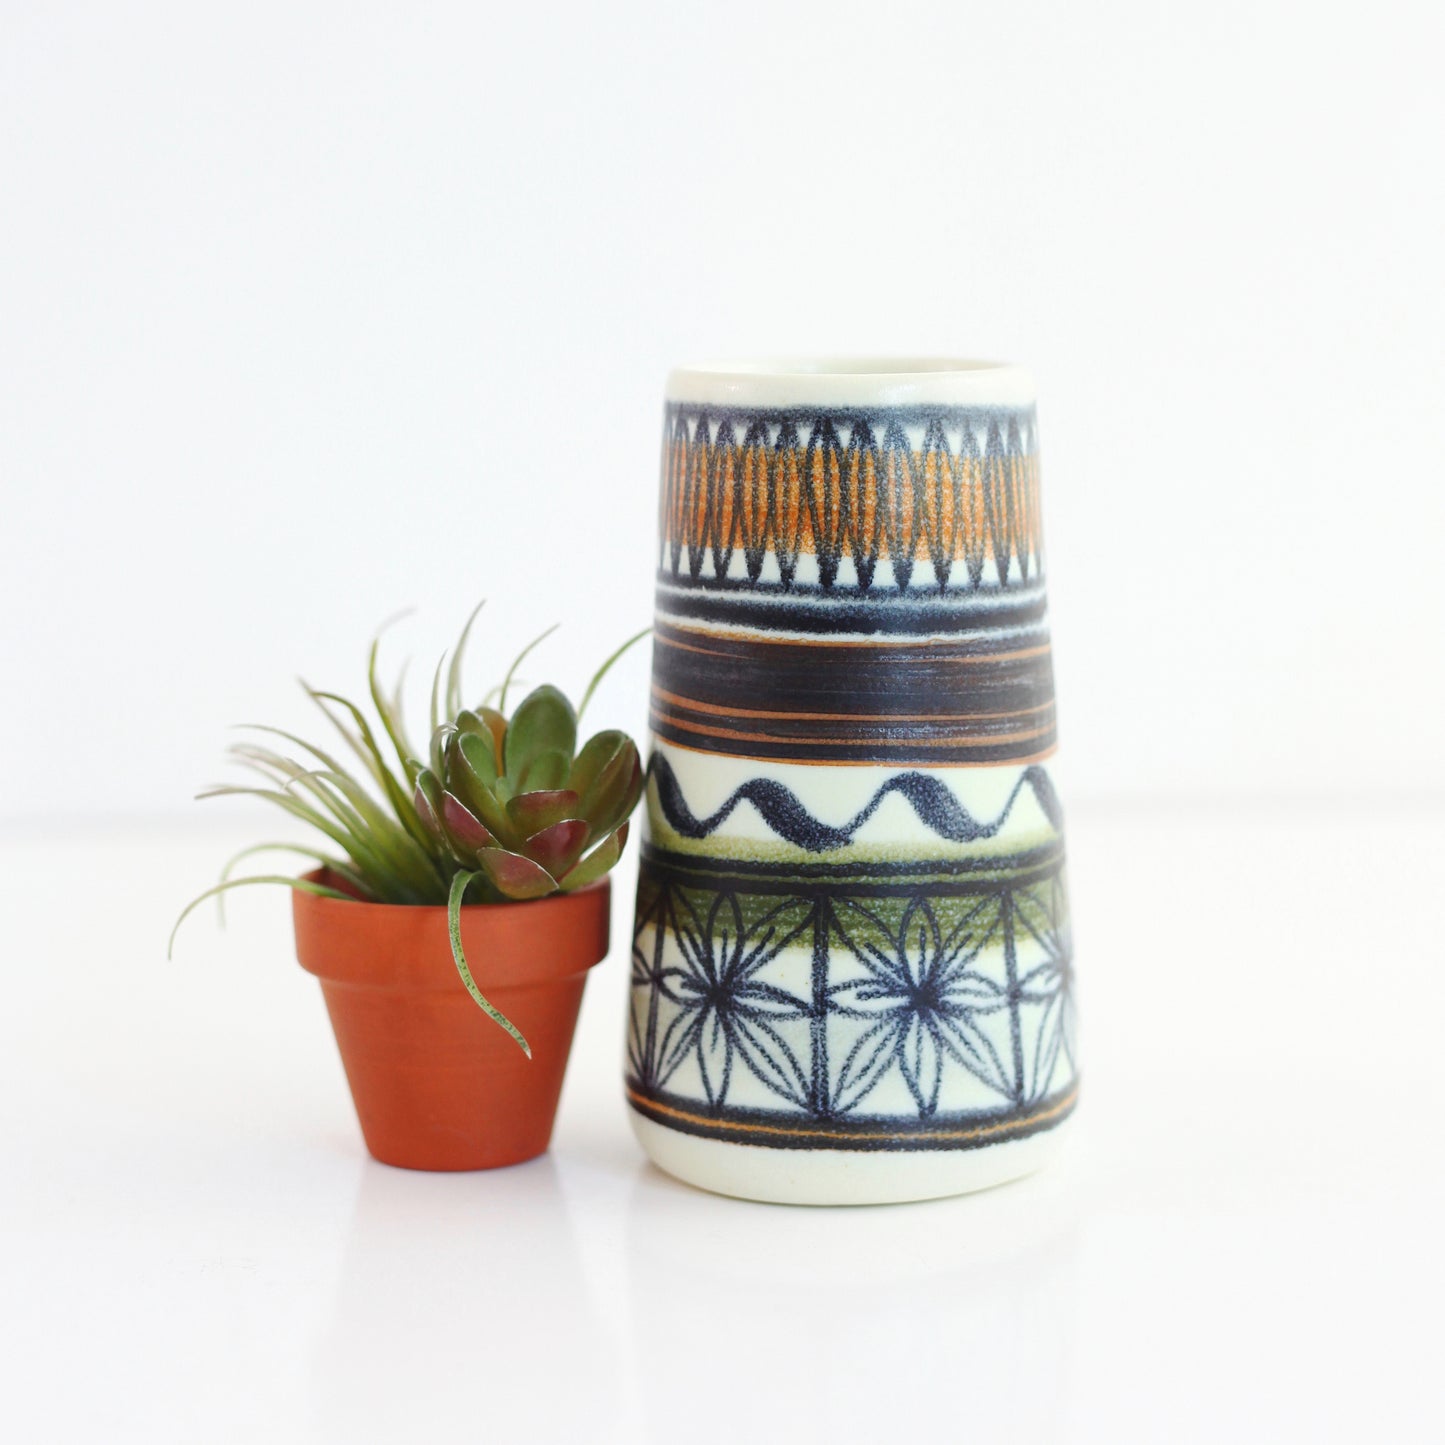 SOLD - Mid Century Modern Geometric Vase from Spain